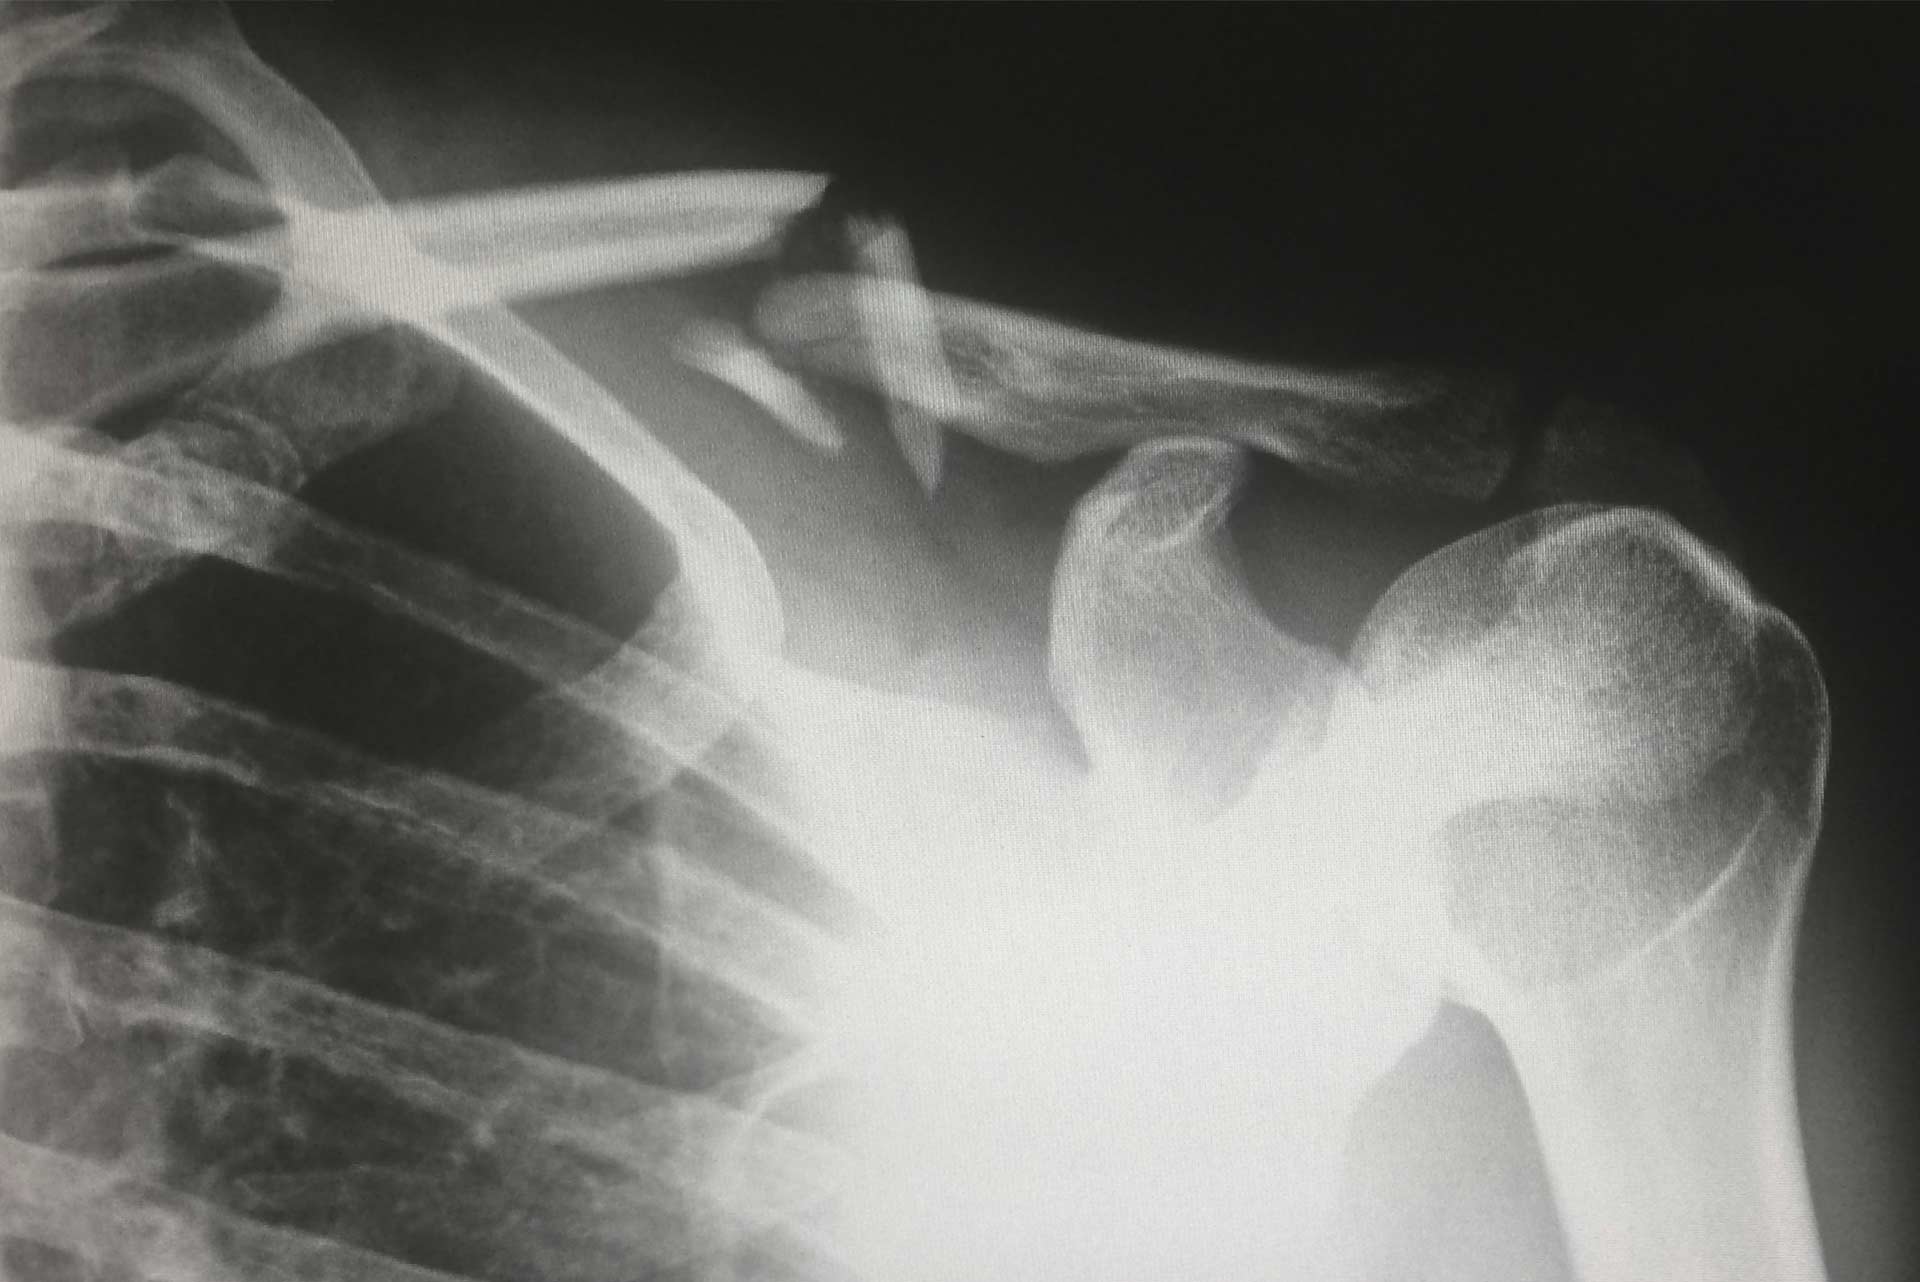 xray of broken collarbone, a source of acute pain.